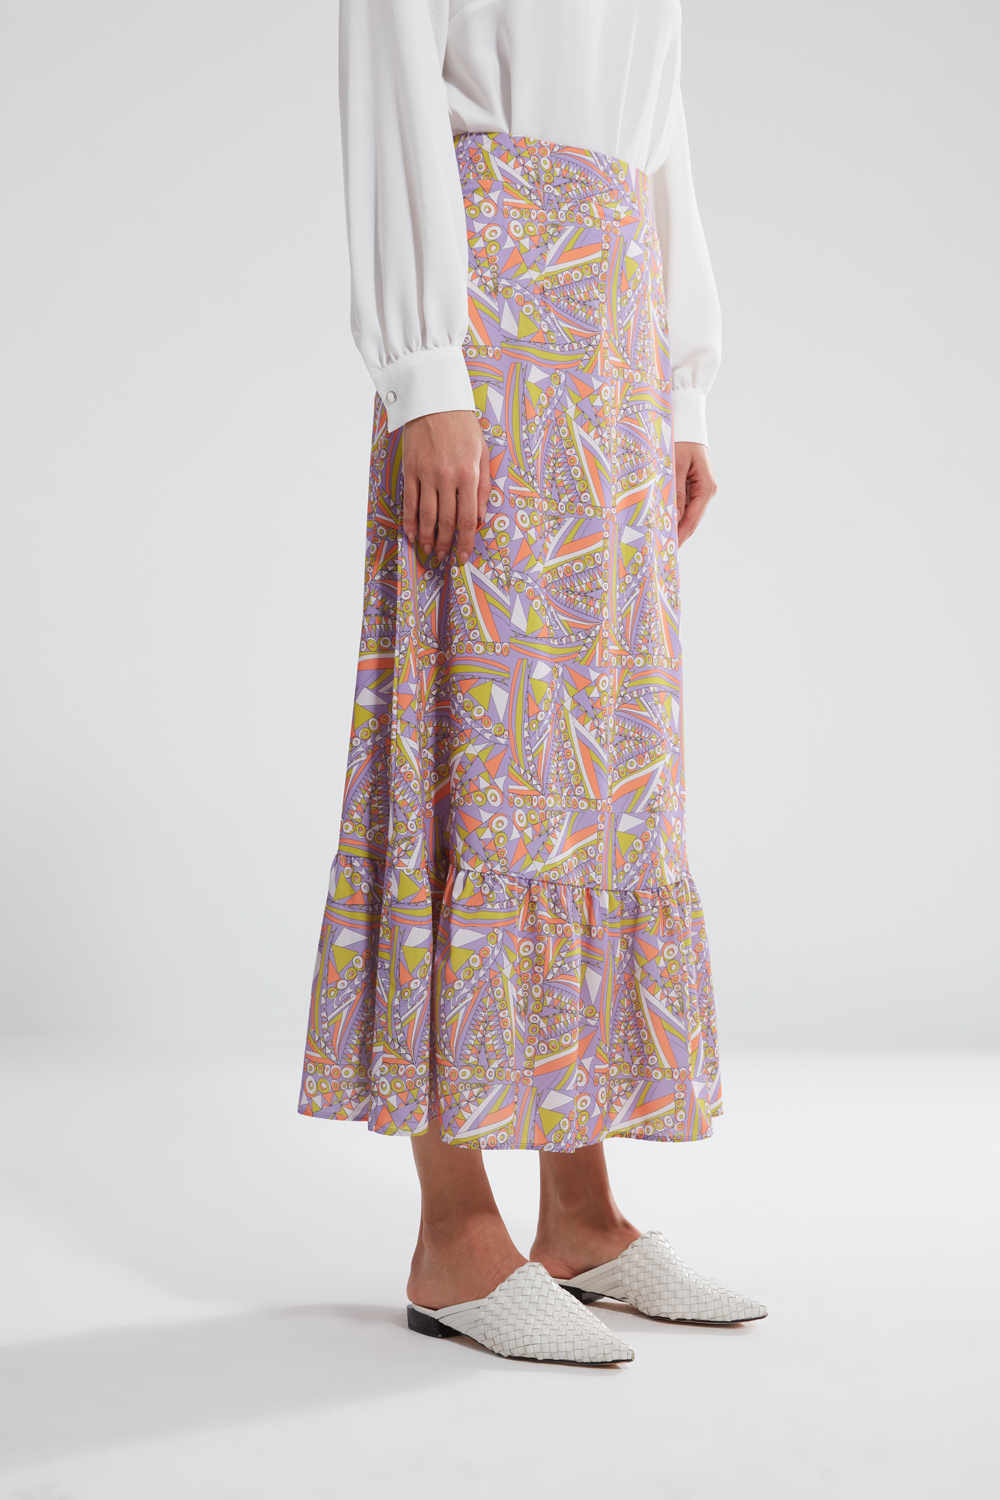 Digital Patterned Ruffle Skirt